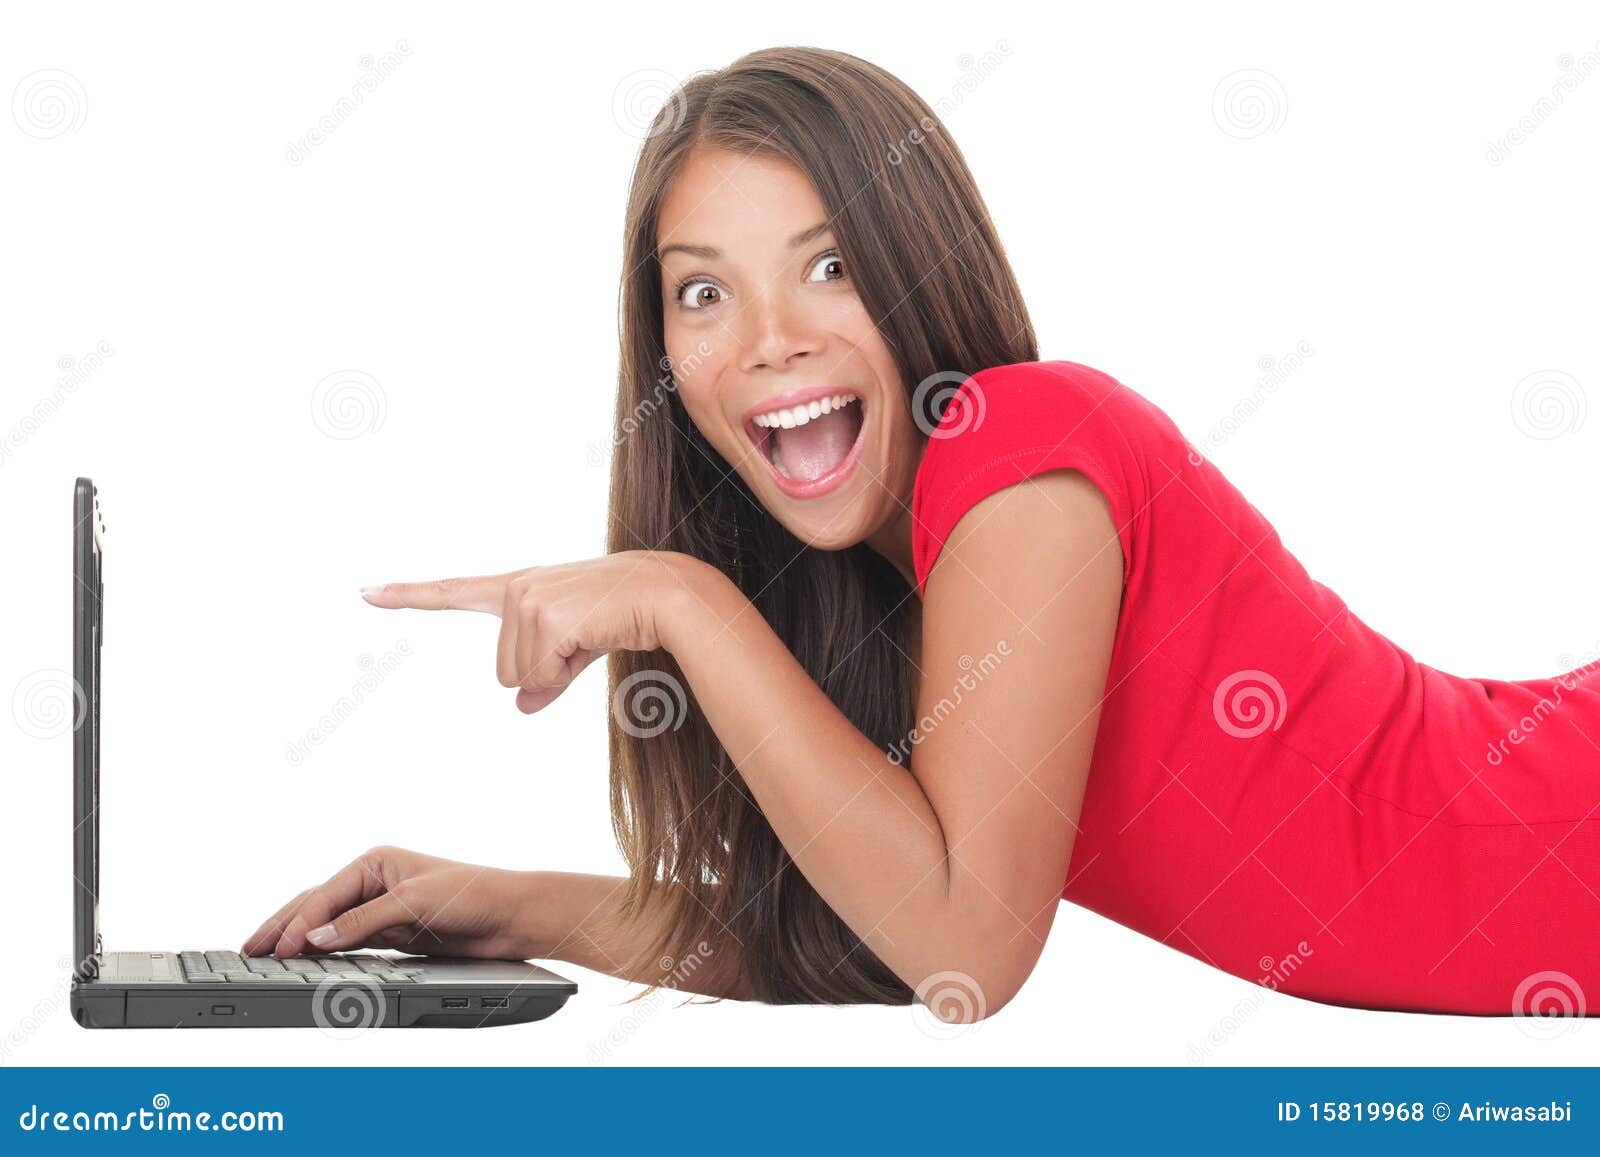 woman-excited-laptop-15819968.jpg